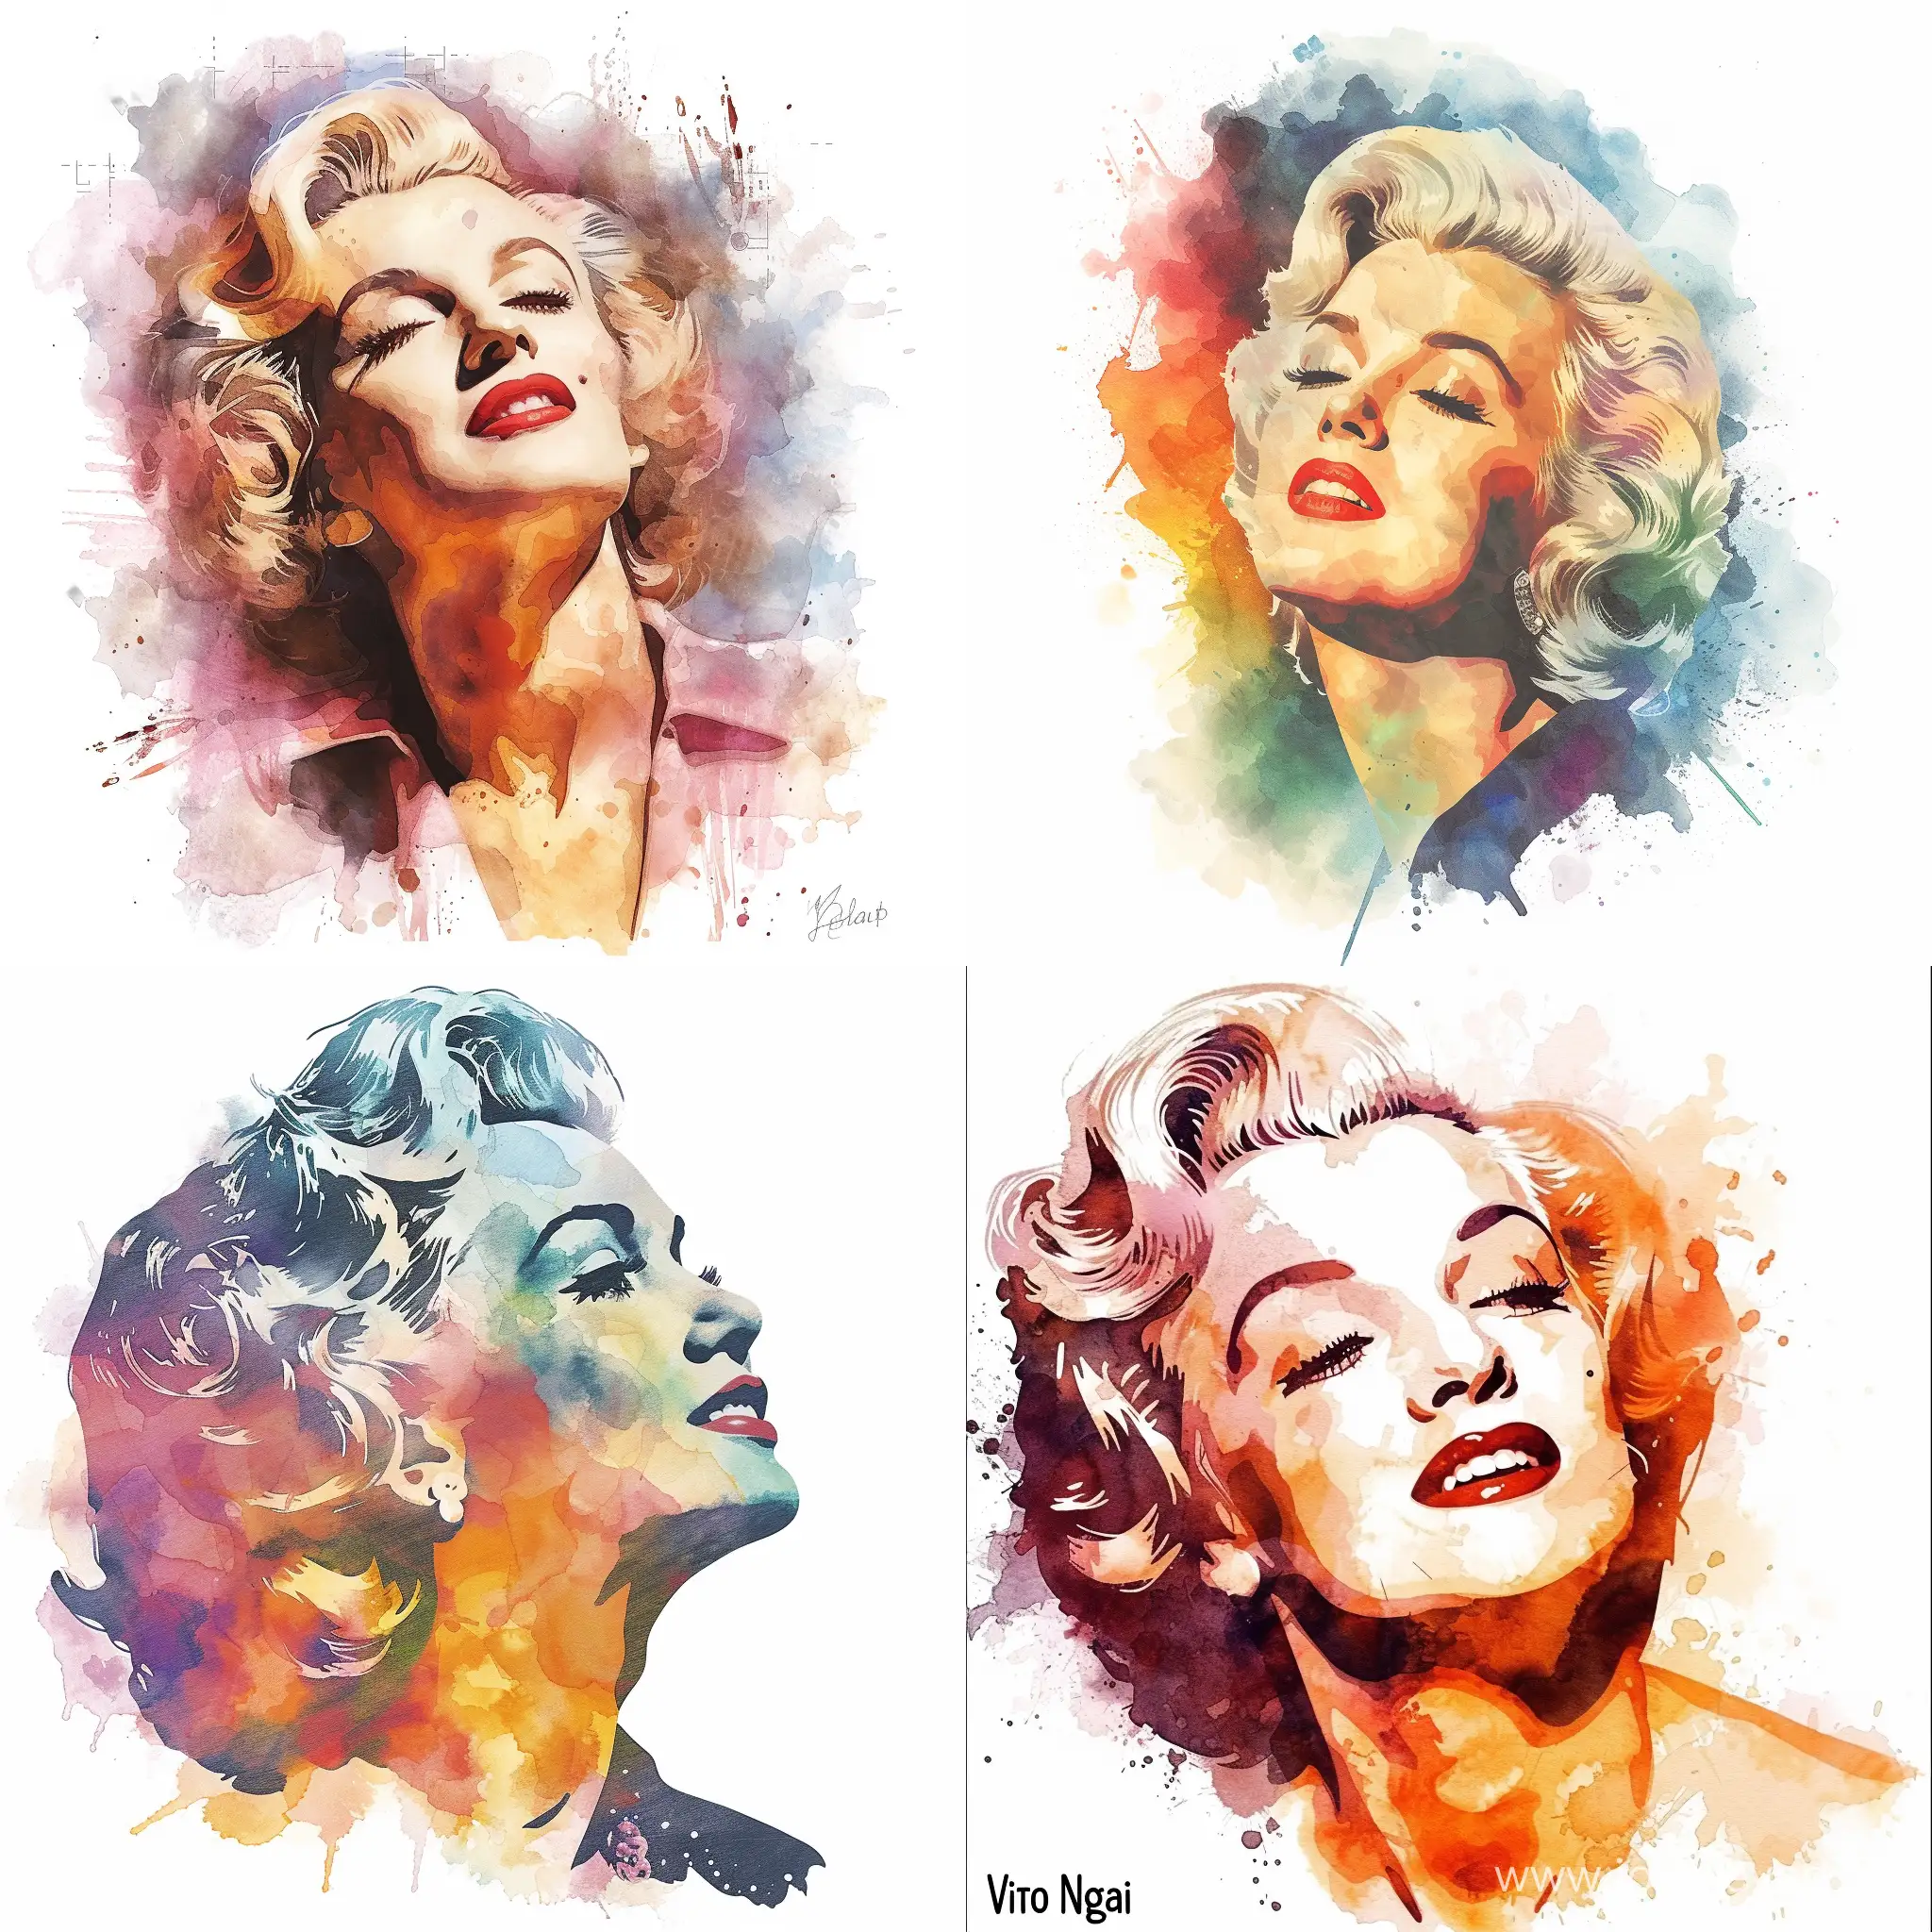 Profile portrait of actress Marilyn Monroe, watercolor, flat illustration, Victo Ngai style